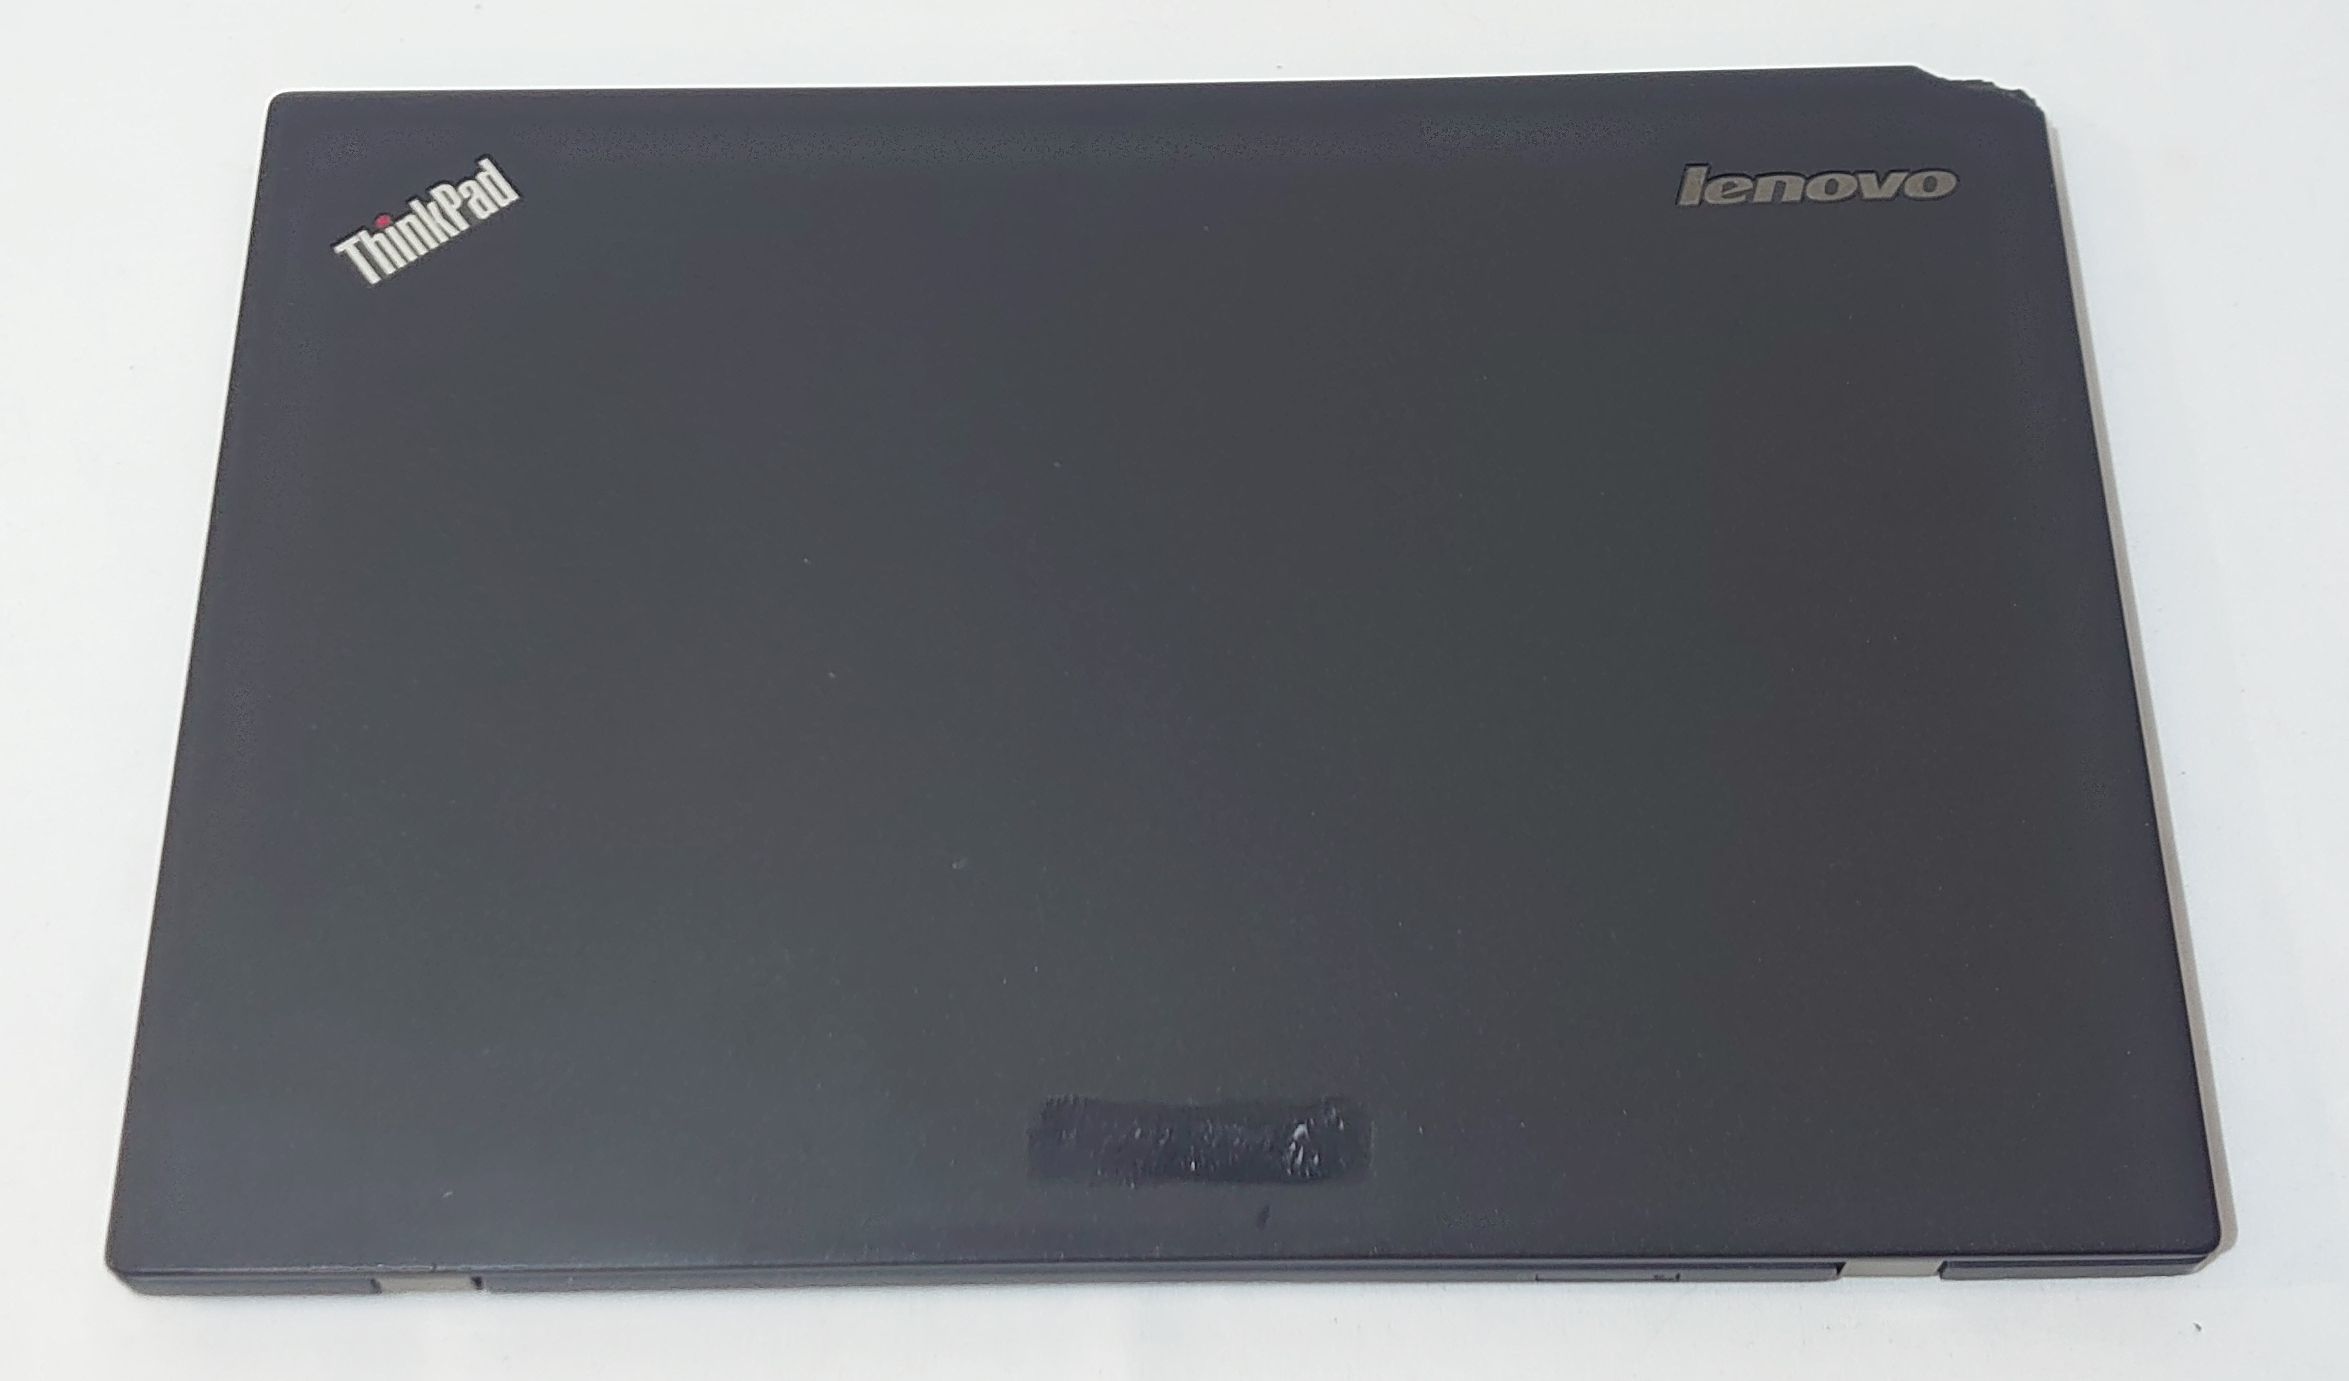 Lenovo ThinkPad X1 Carbon i7, 8GB RAM (LO167)